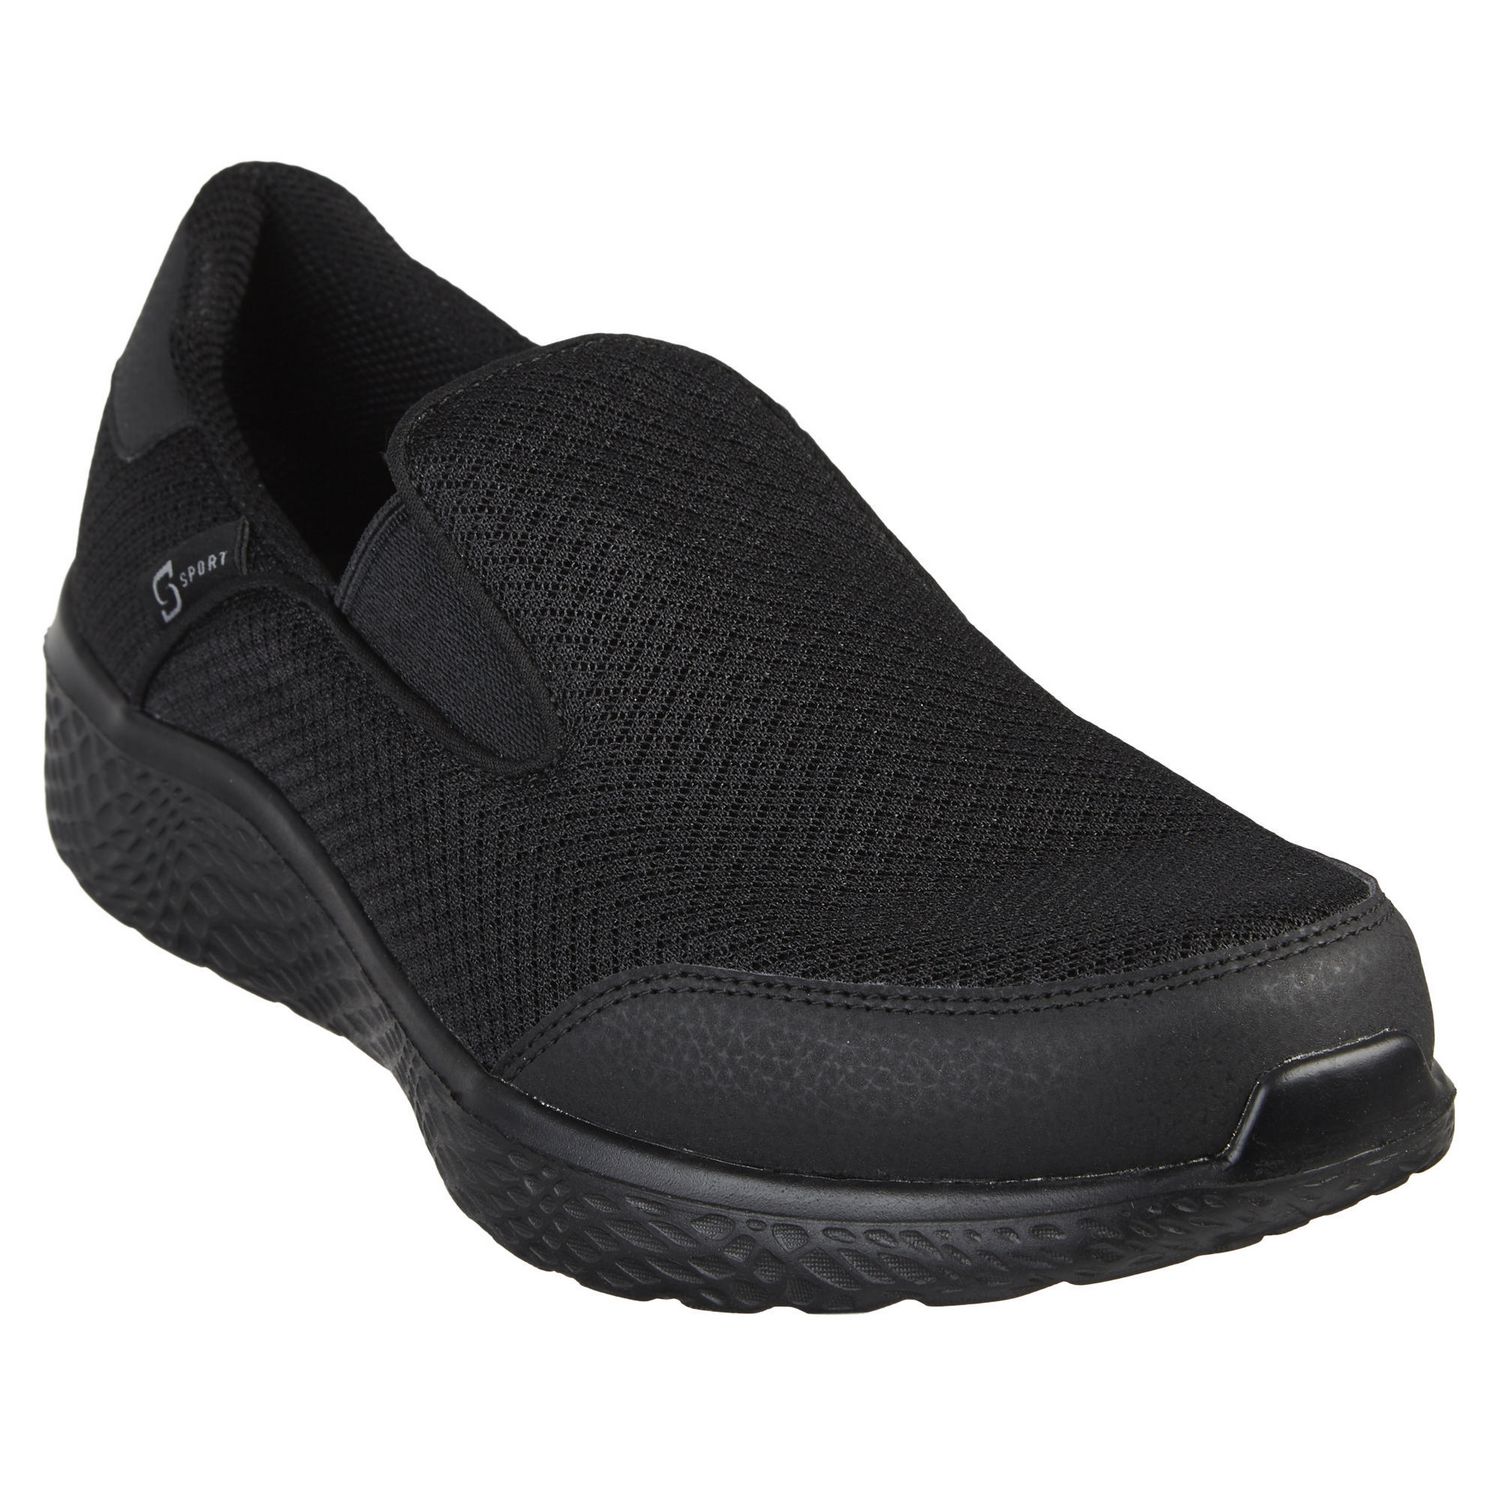 S Sport Designed by Skechers Men’s Sport Casual Shoes | Walmart Canada